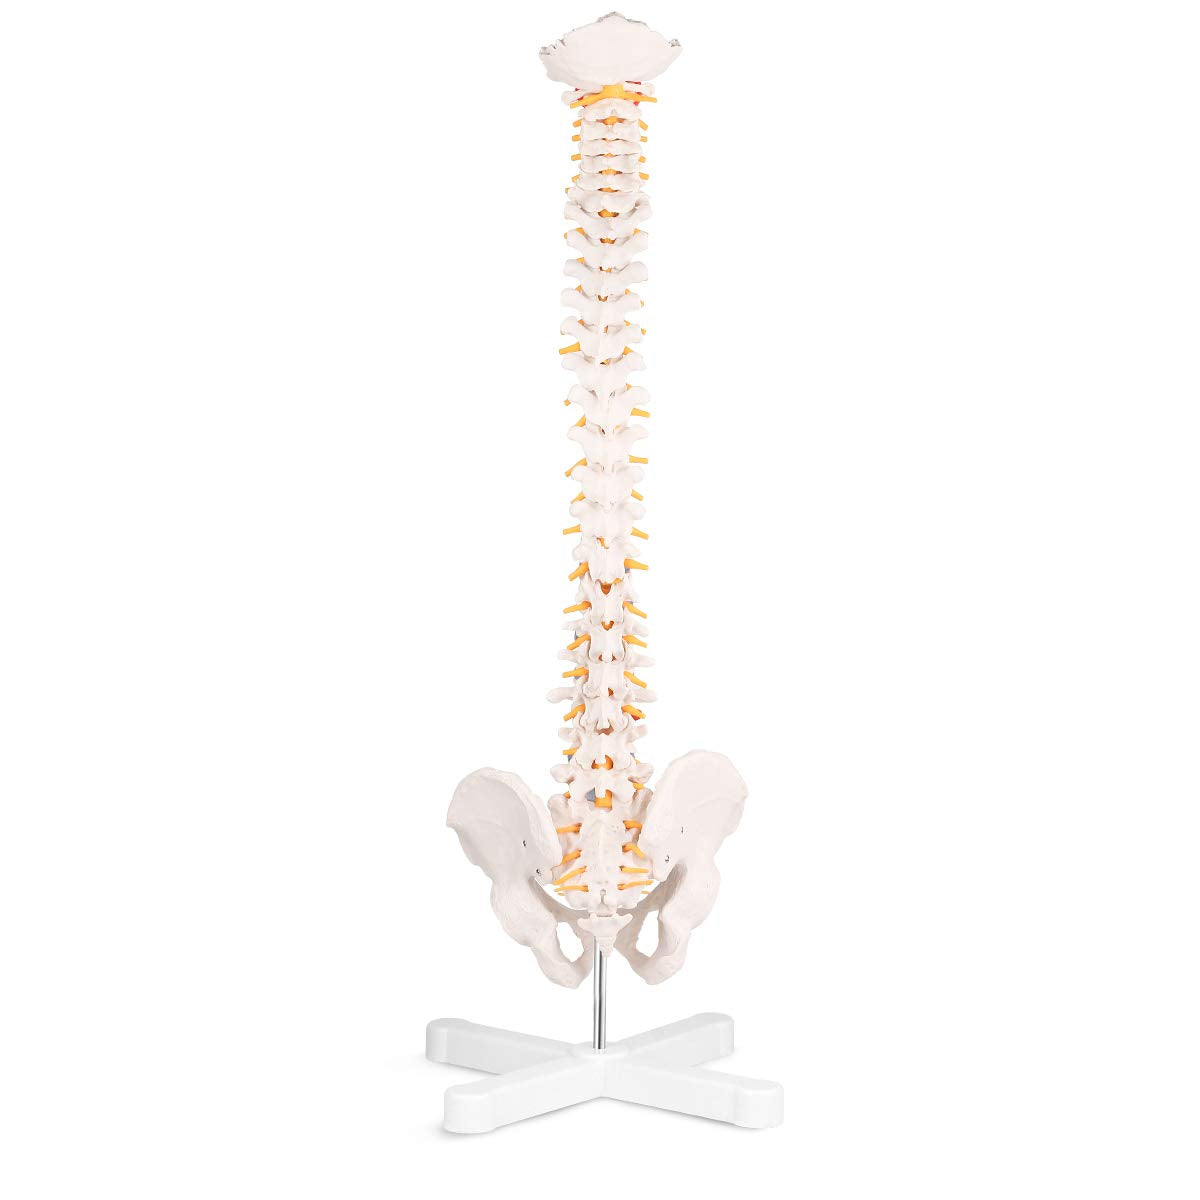 healthcare training, medical school,display model,demonstration model,skeleton Model,RONTEN,Human Spine Model,31"Human Spine Model,Vertebrae,Nerves,Arteries,Lumbar Column,anatomy models